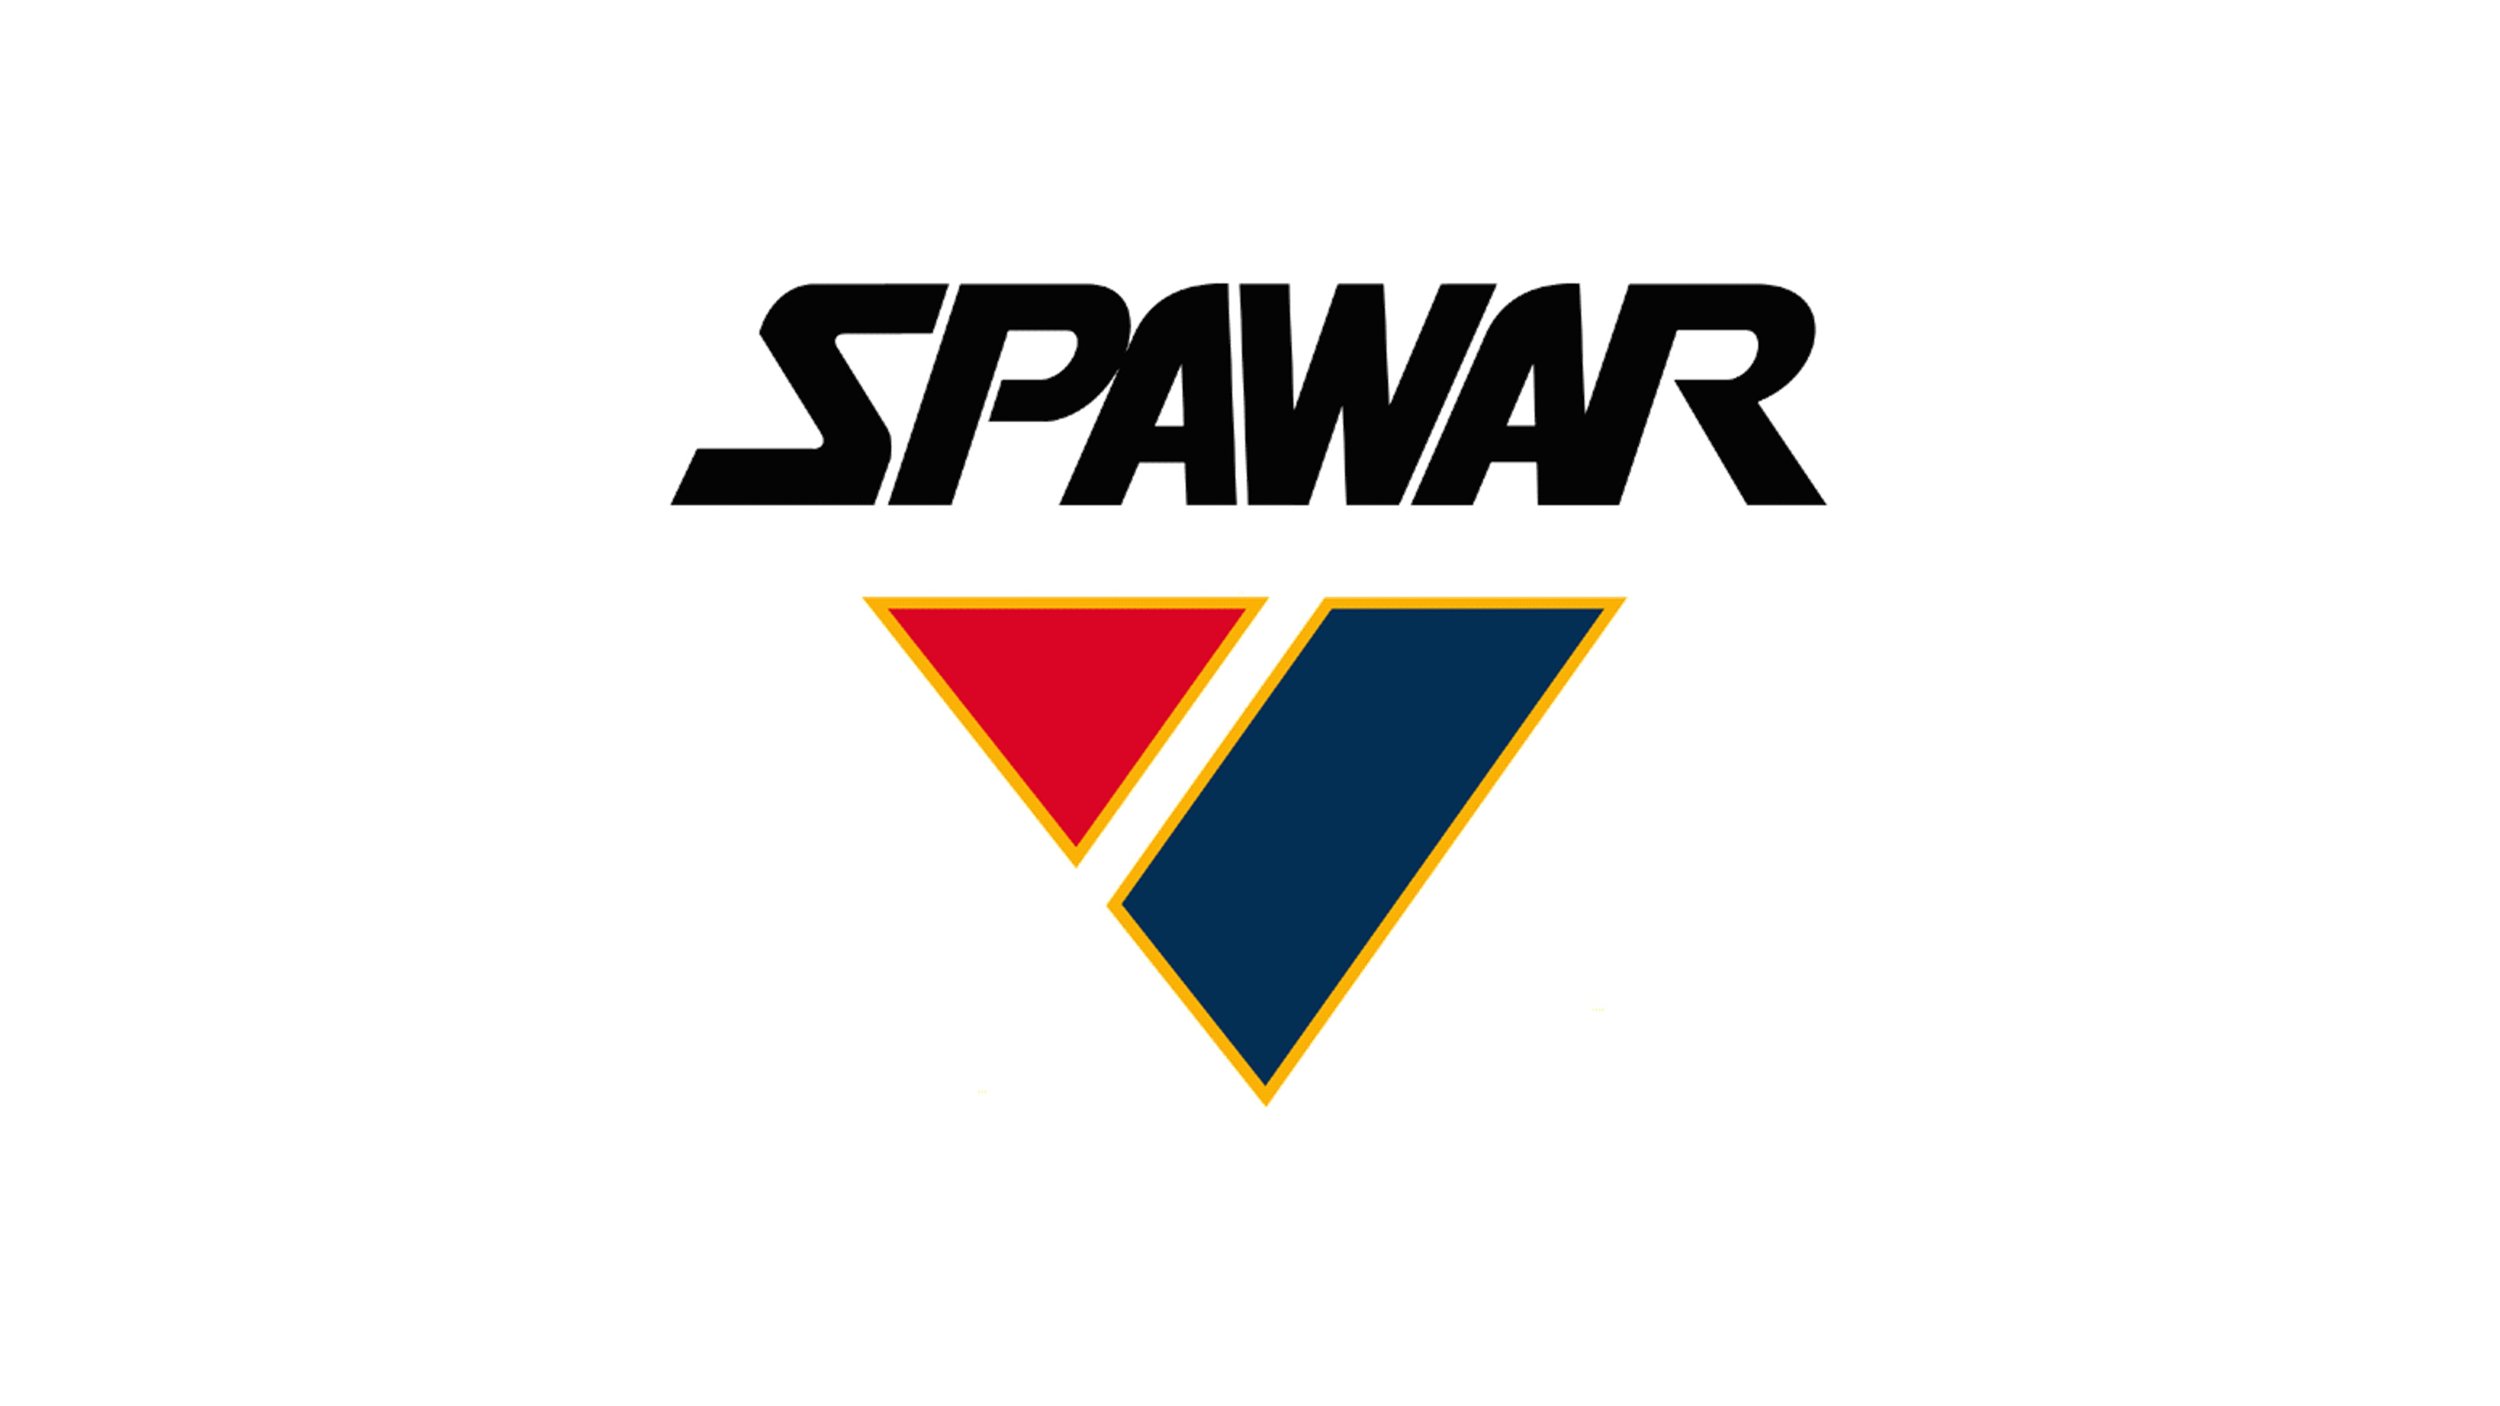 spawar2.jpg